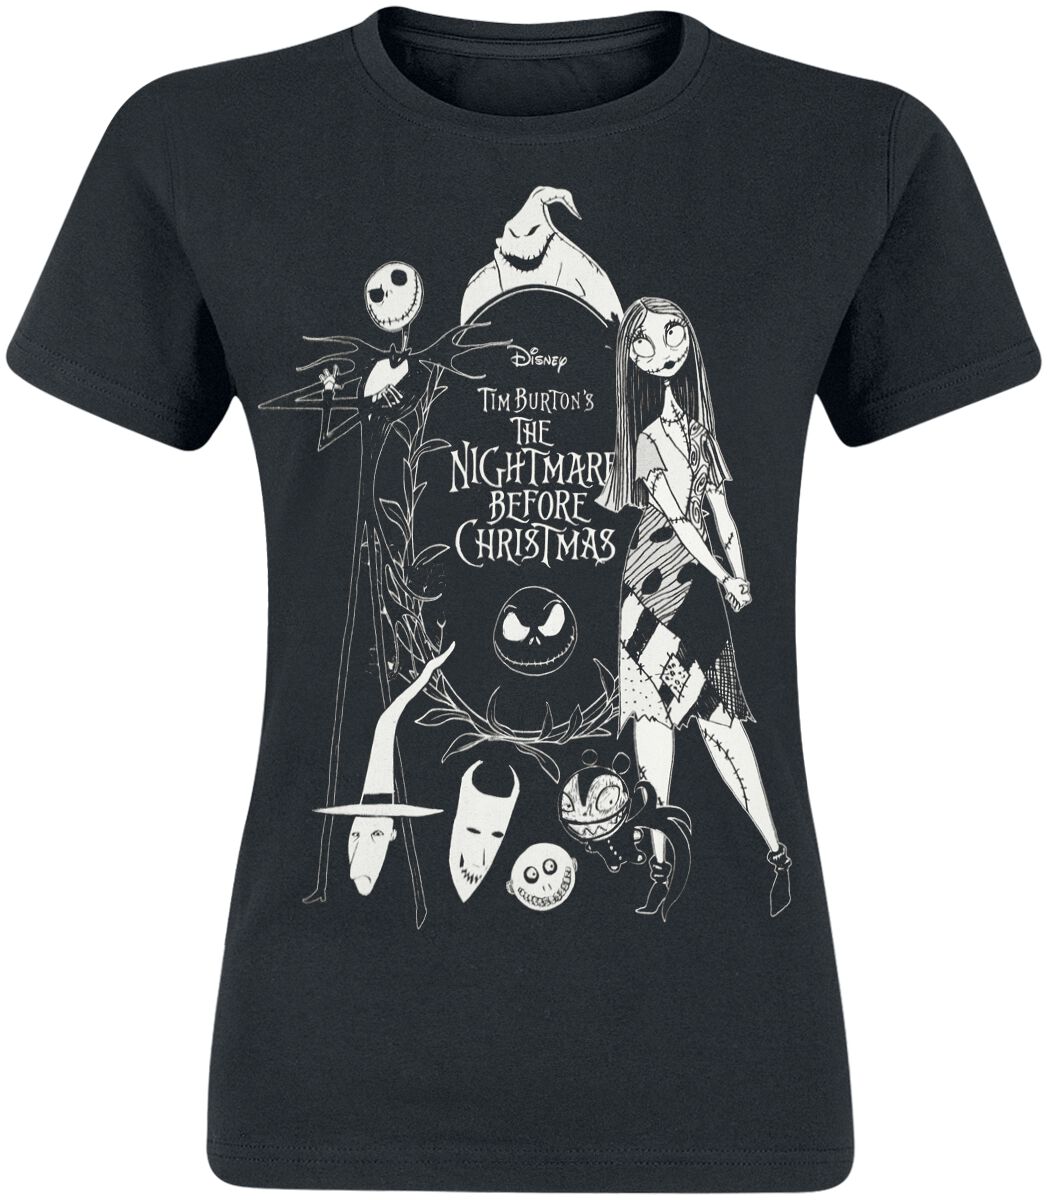 The Nightmare Before Christmas - Nightmare Band - T-Shirt - schwarz